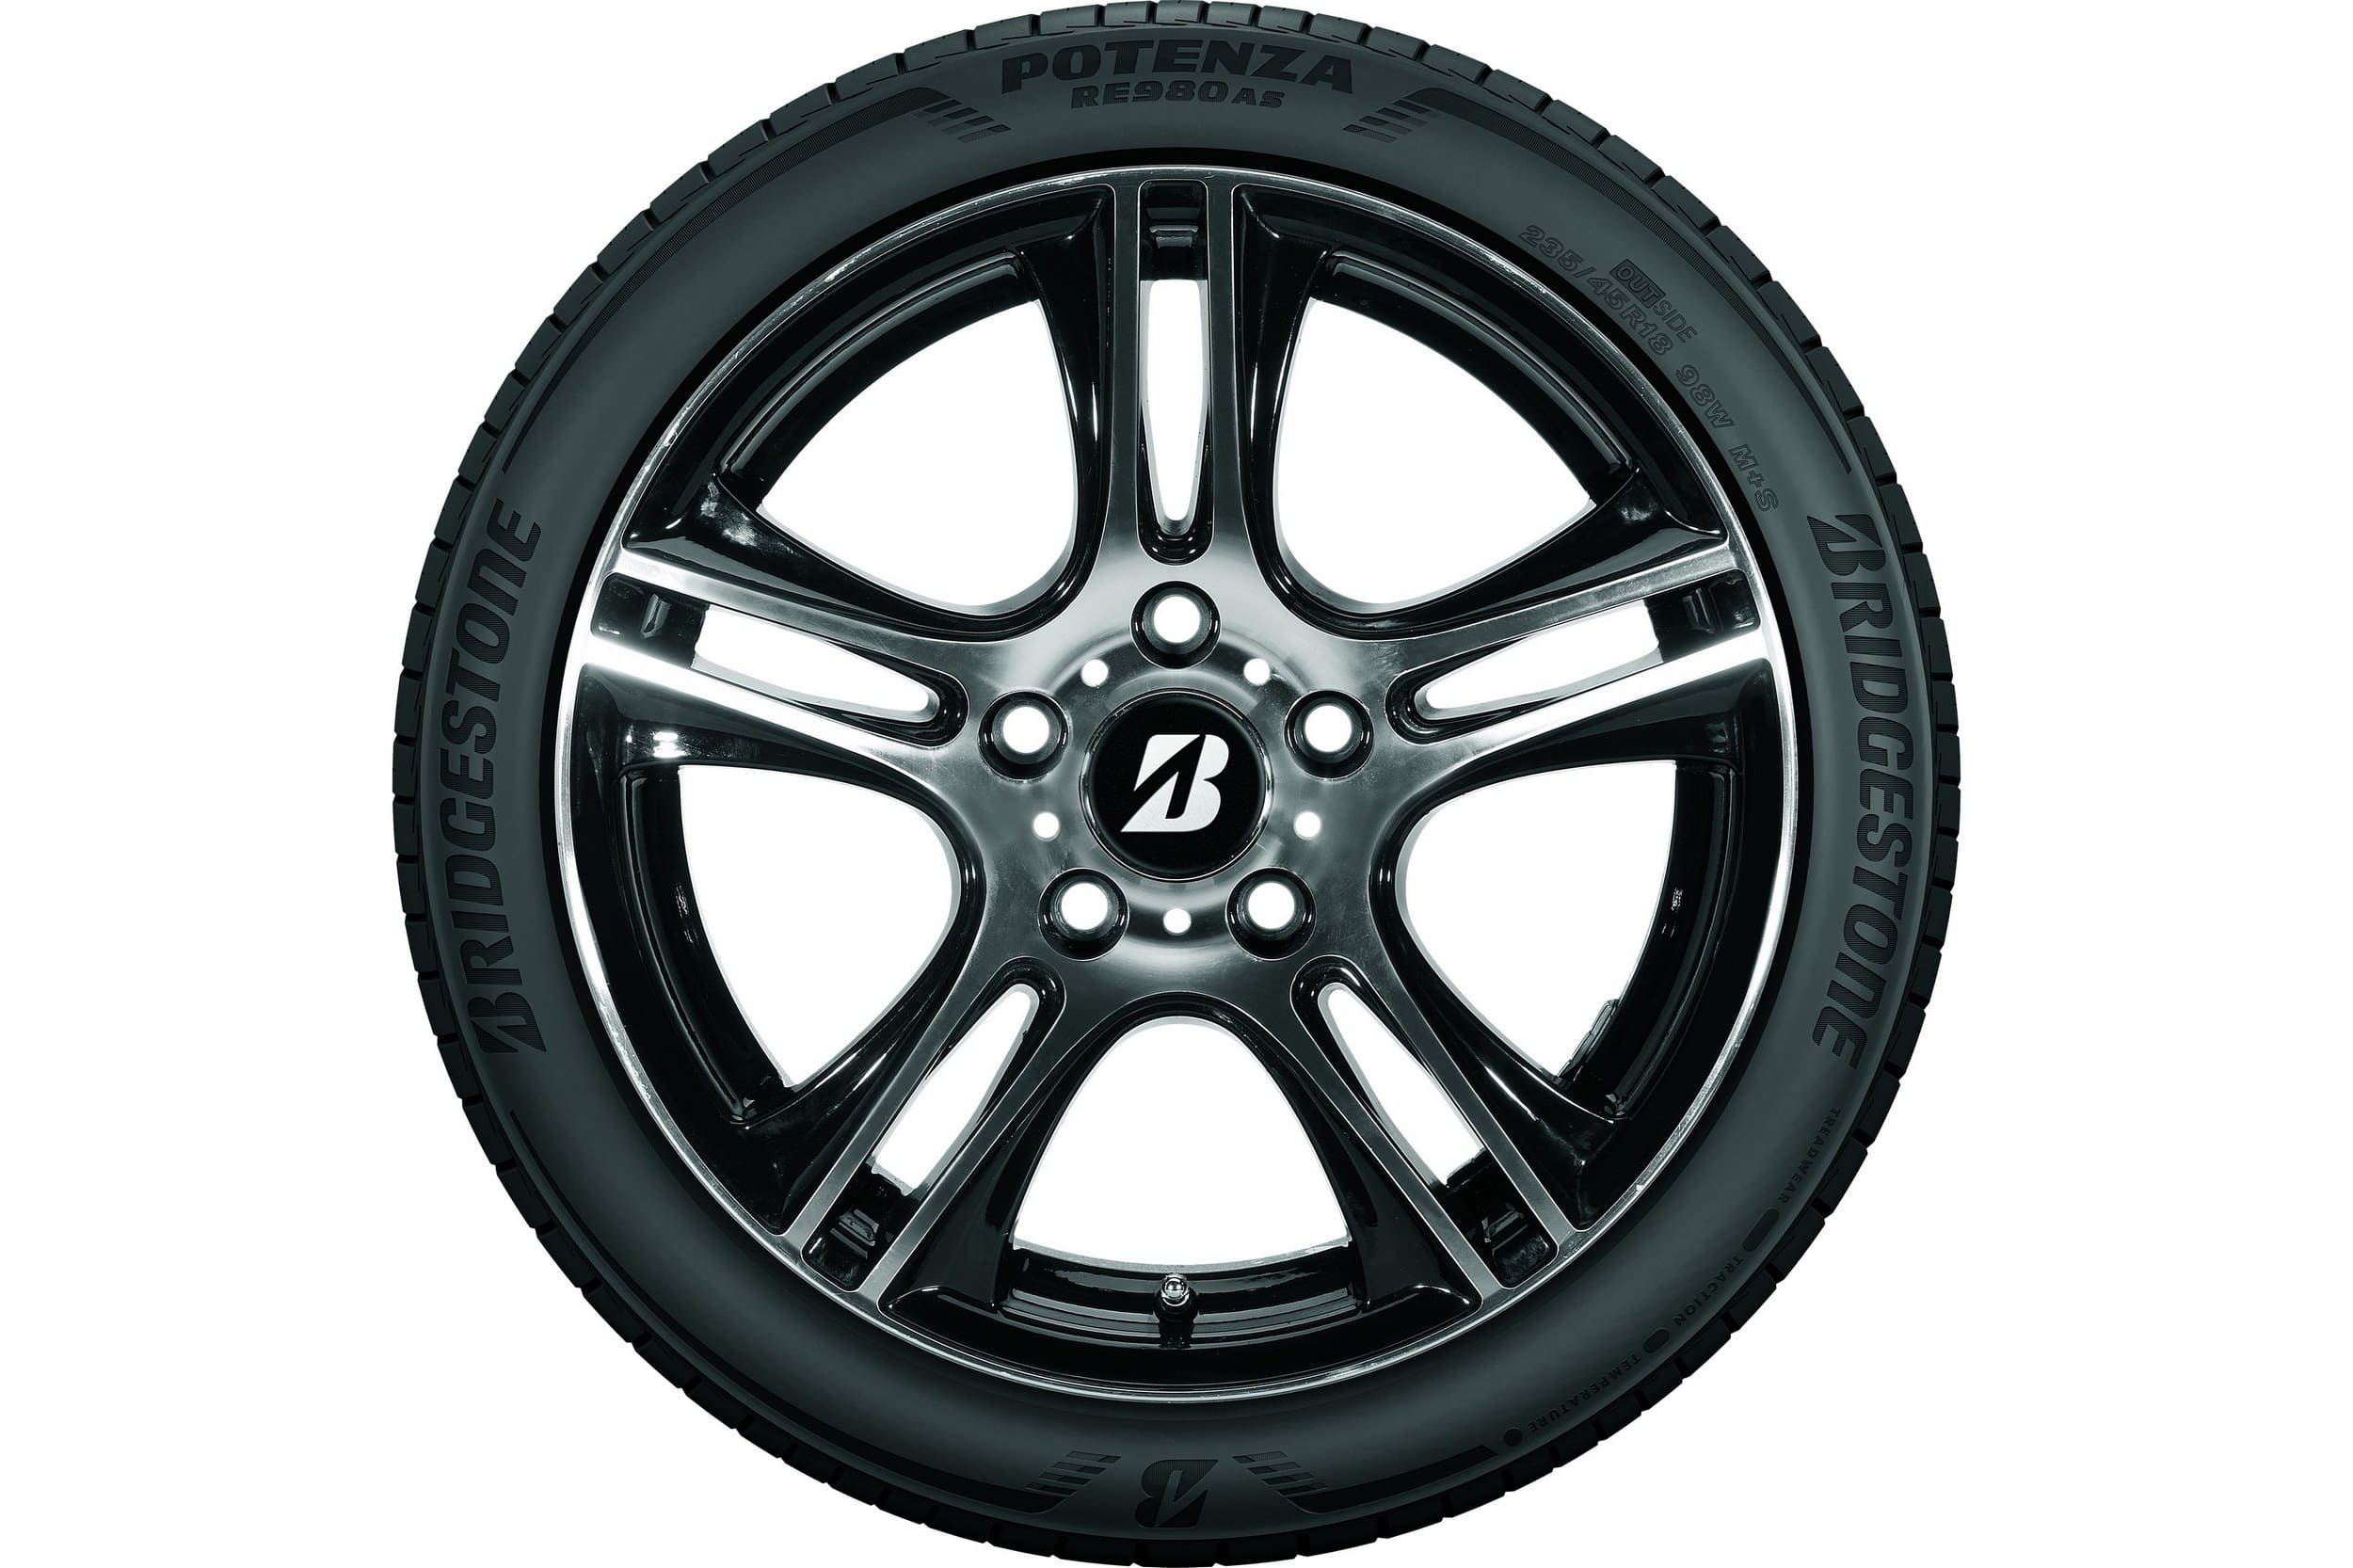 bridgestone-potenza-re980as-tire-review-tire-space-tires-reviews